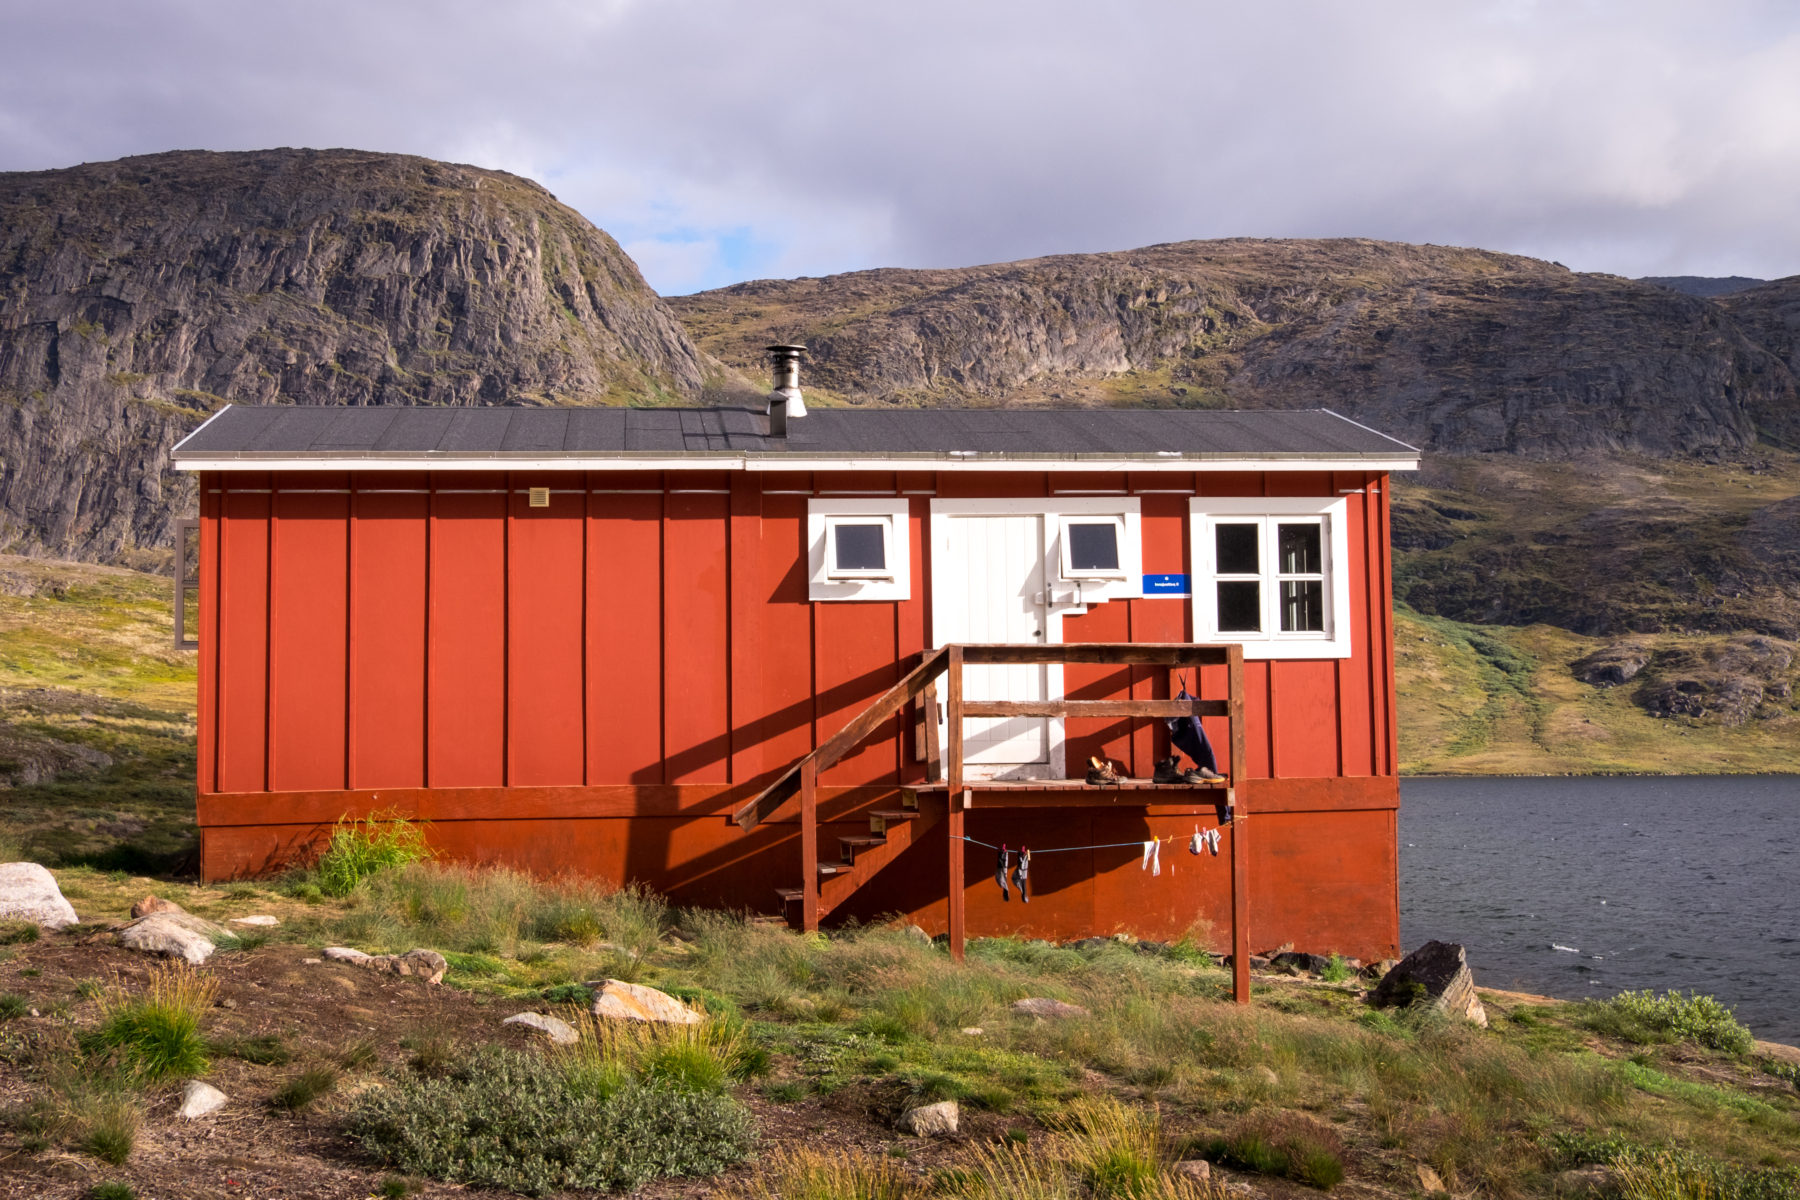 Innajuatooq II hut - the Lake House - on the Arctic Circle Trail